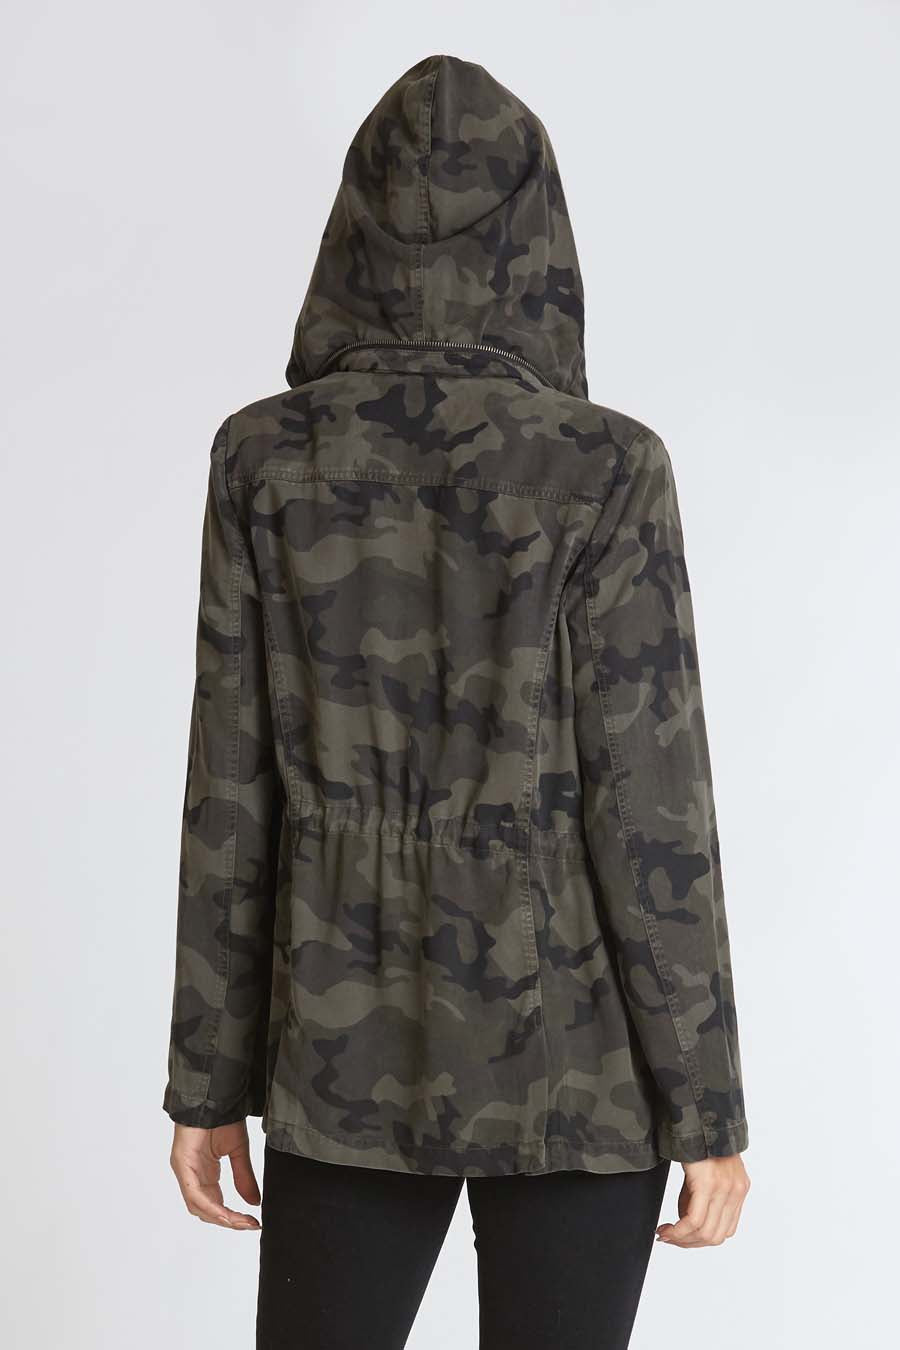 Gentle Fawn Archer Jacket - Camo Print Jacket - Army Jacket - $145.00 -  Lulus